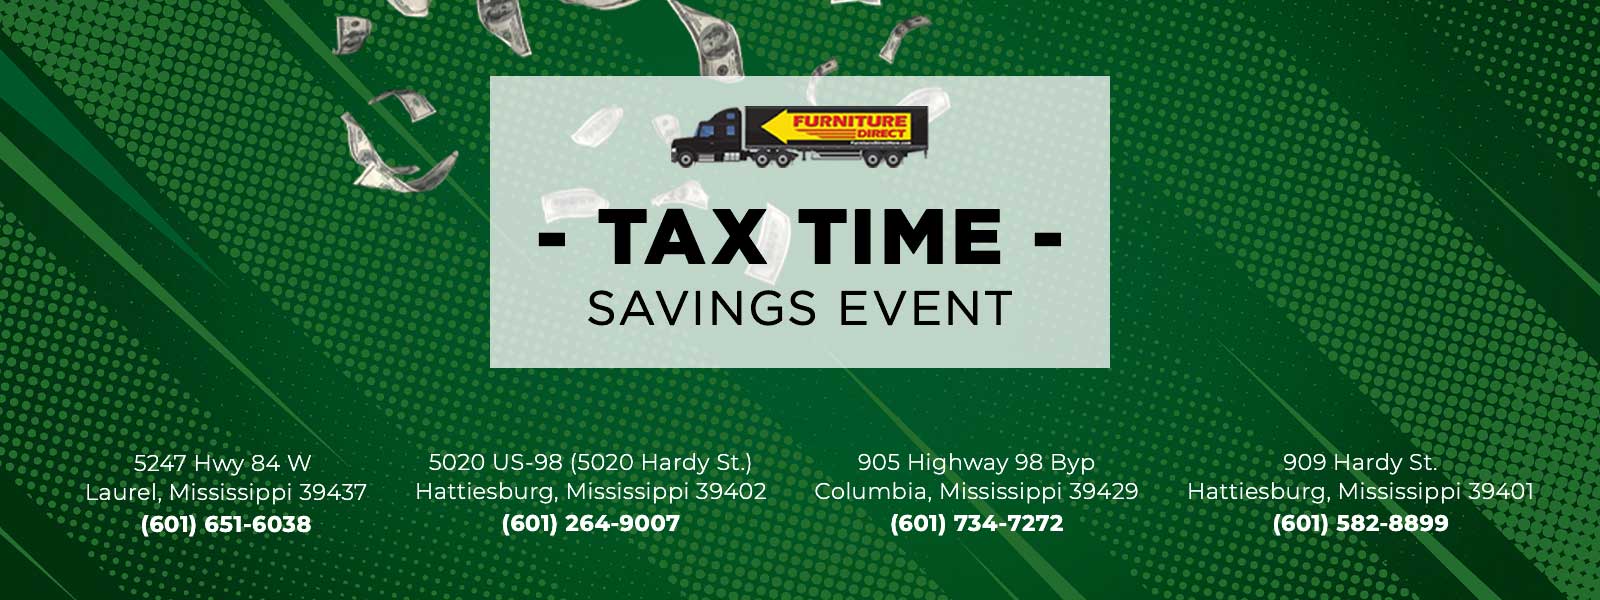 Tax Time - Saving Event